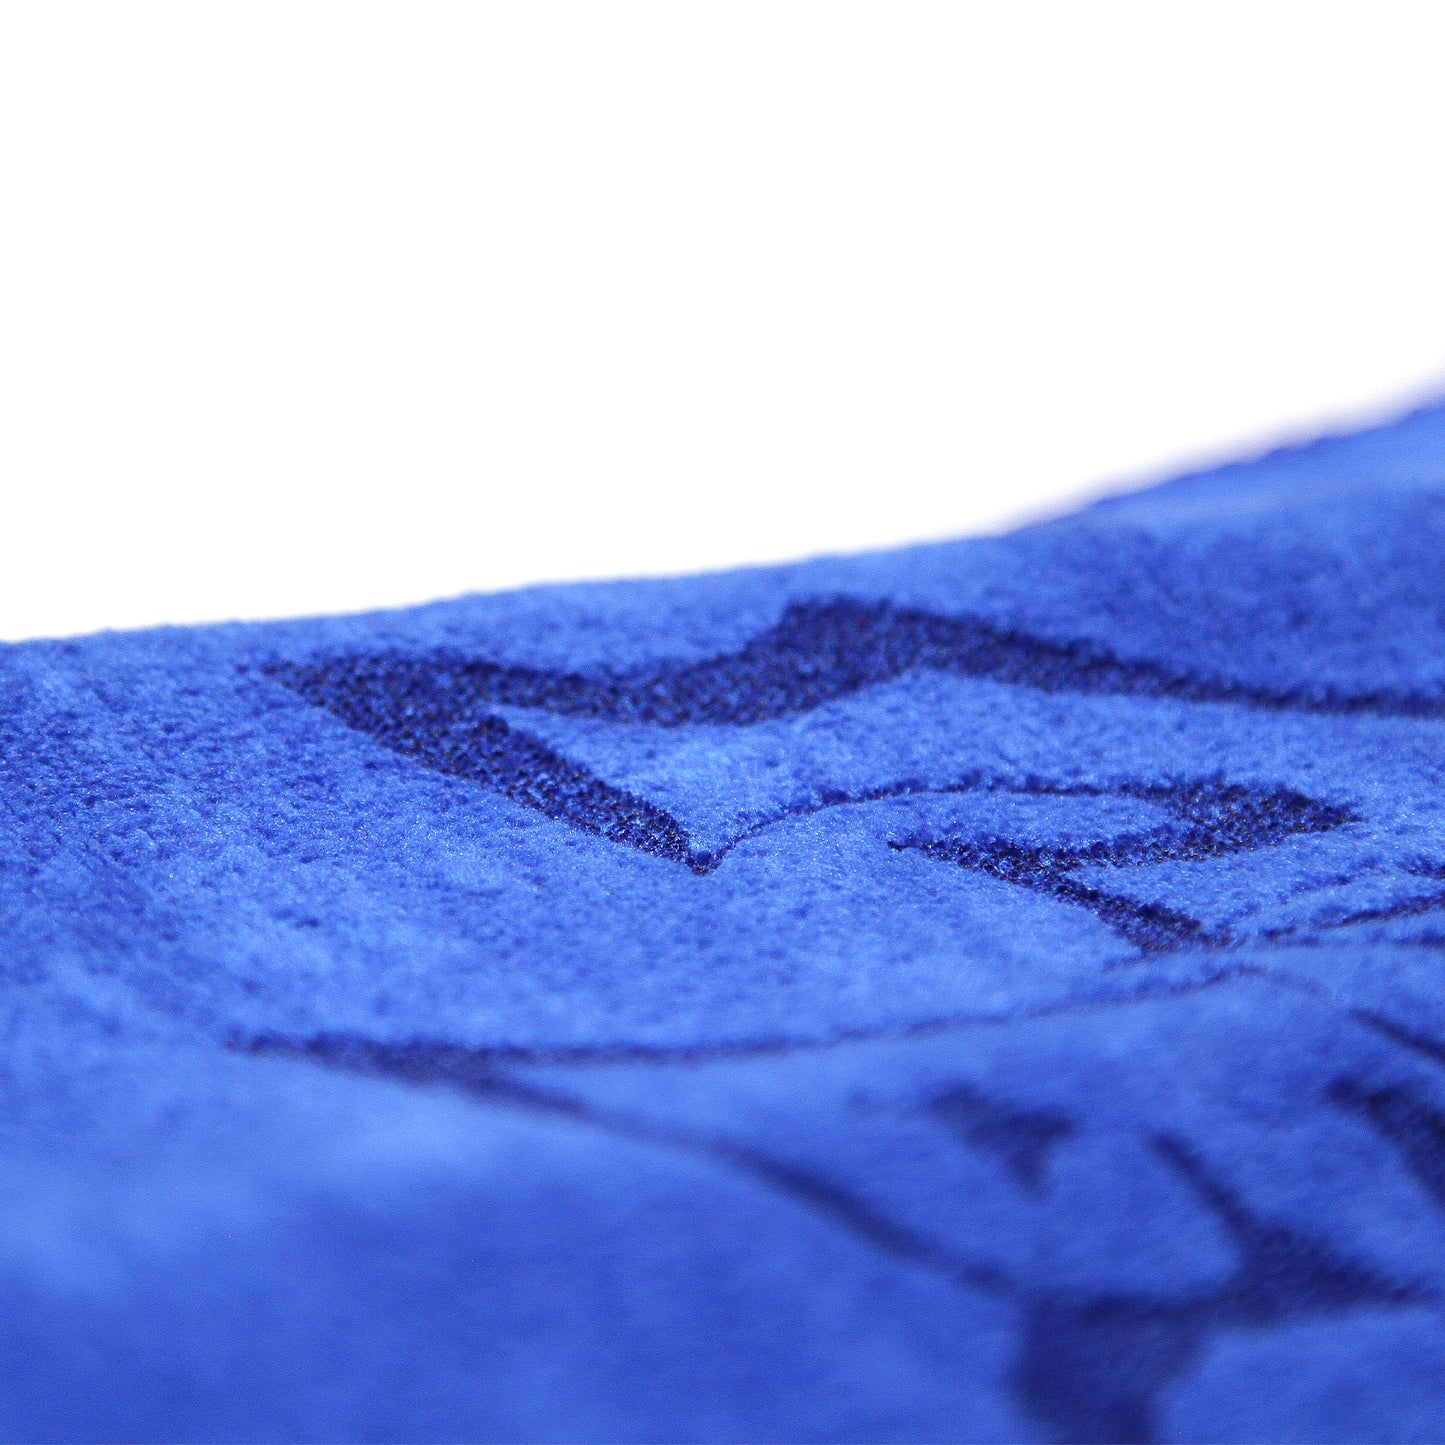 MOTO-BUNKA - Summer Logo Microfiber Towel